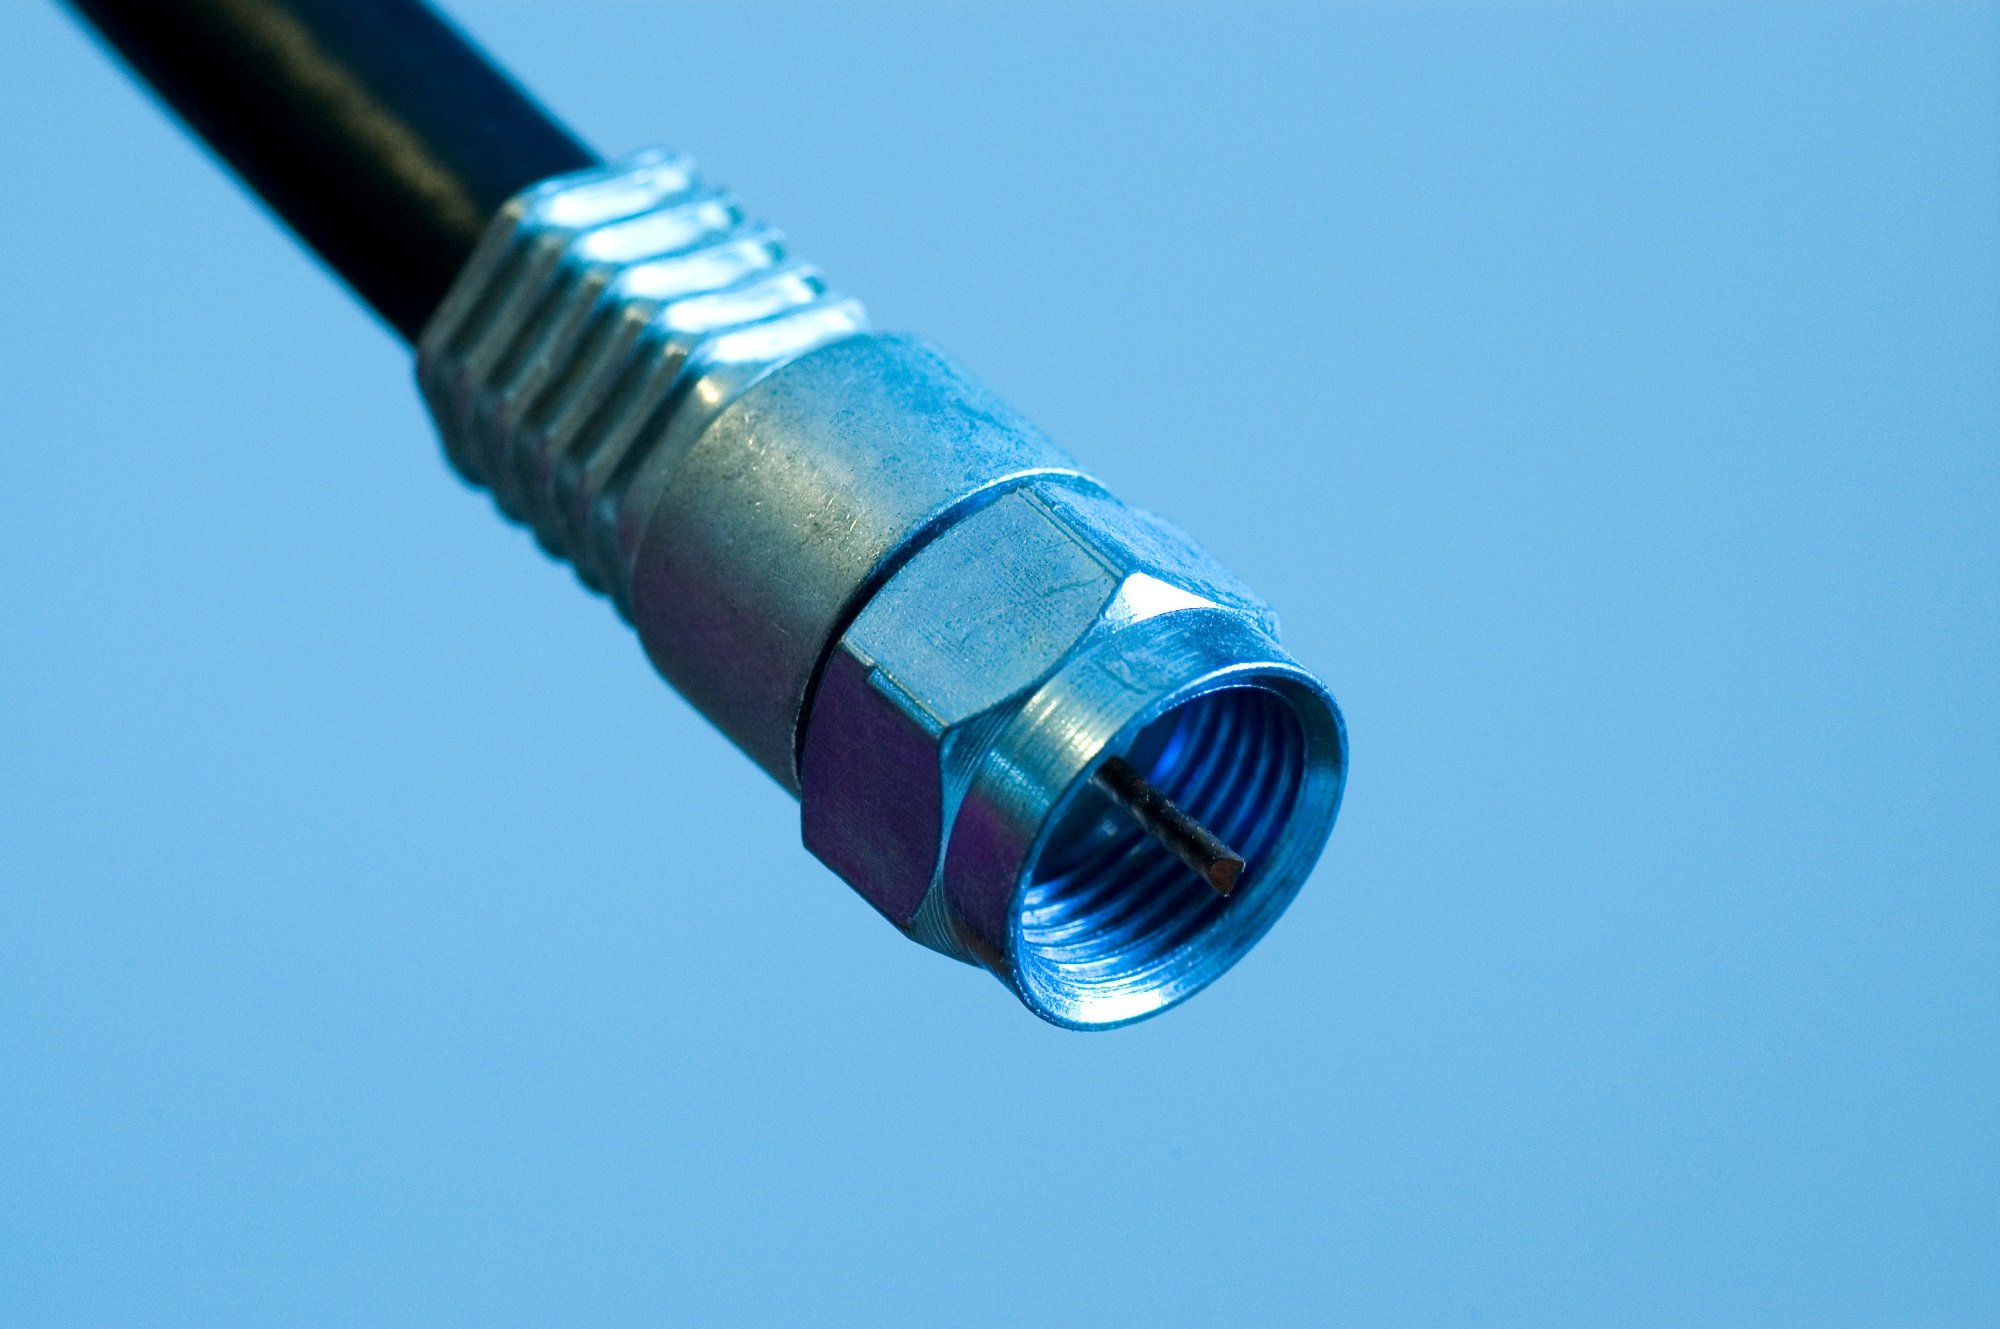 coaxial cable closeup